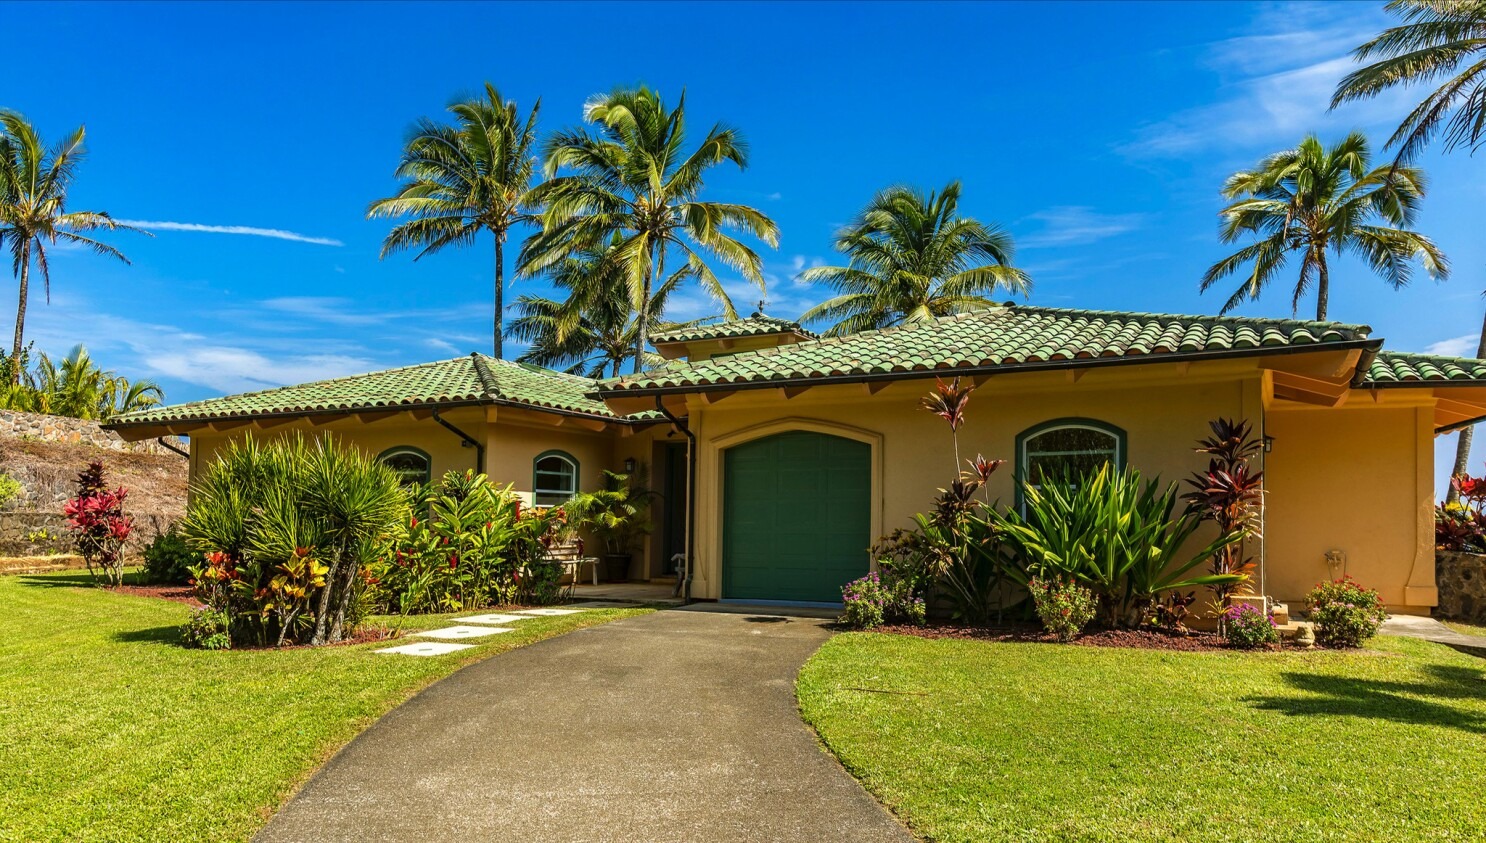 Sammy Hagar's Former Hawaiian Haven